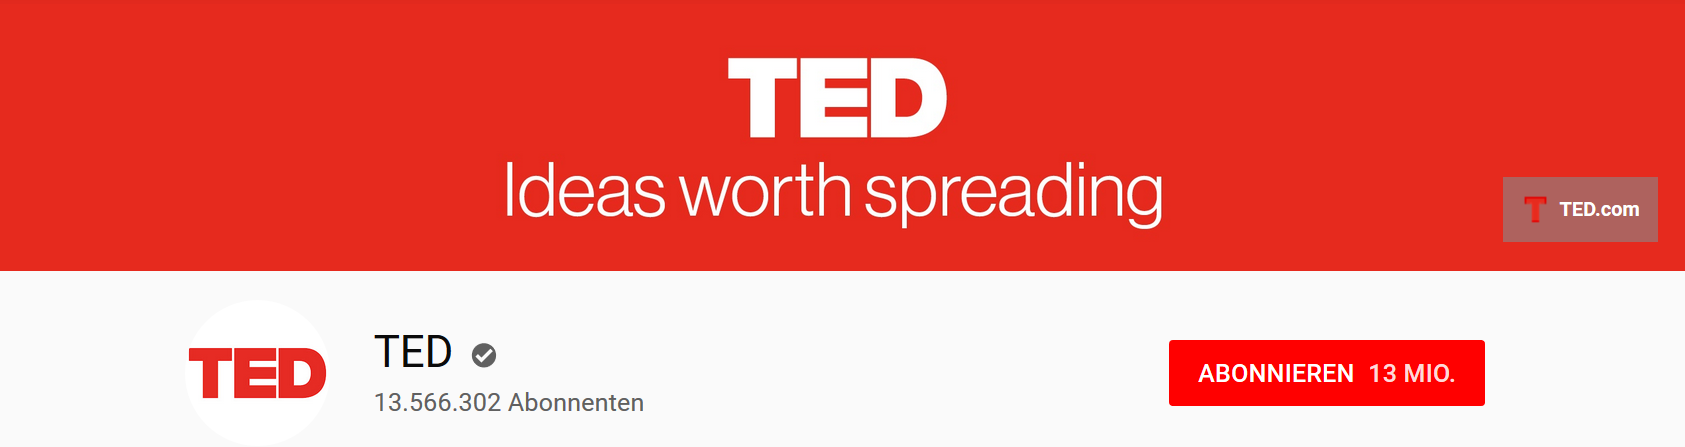 Ted Ideas Worth Spreading